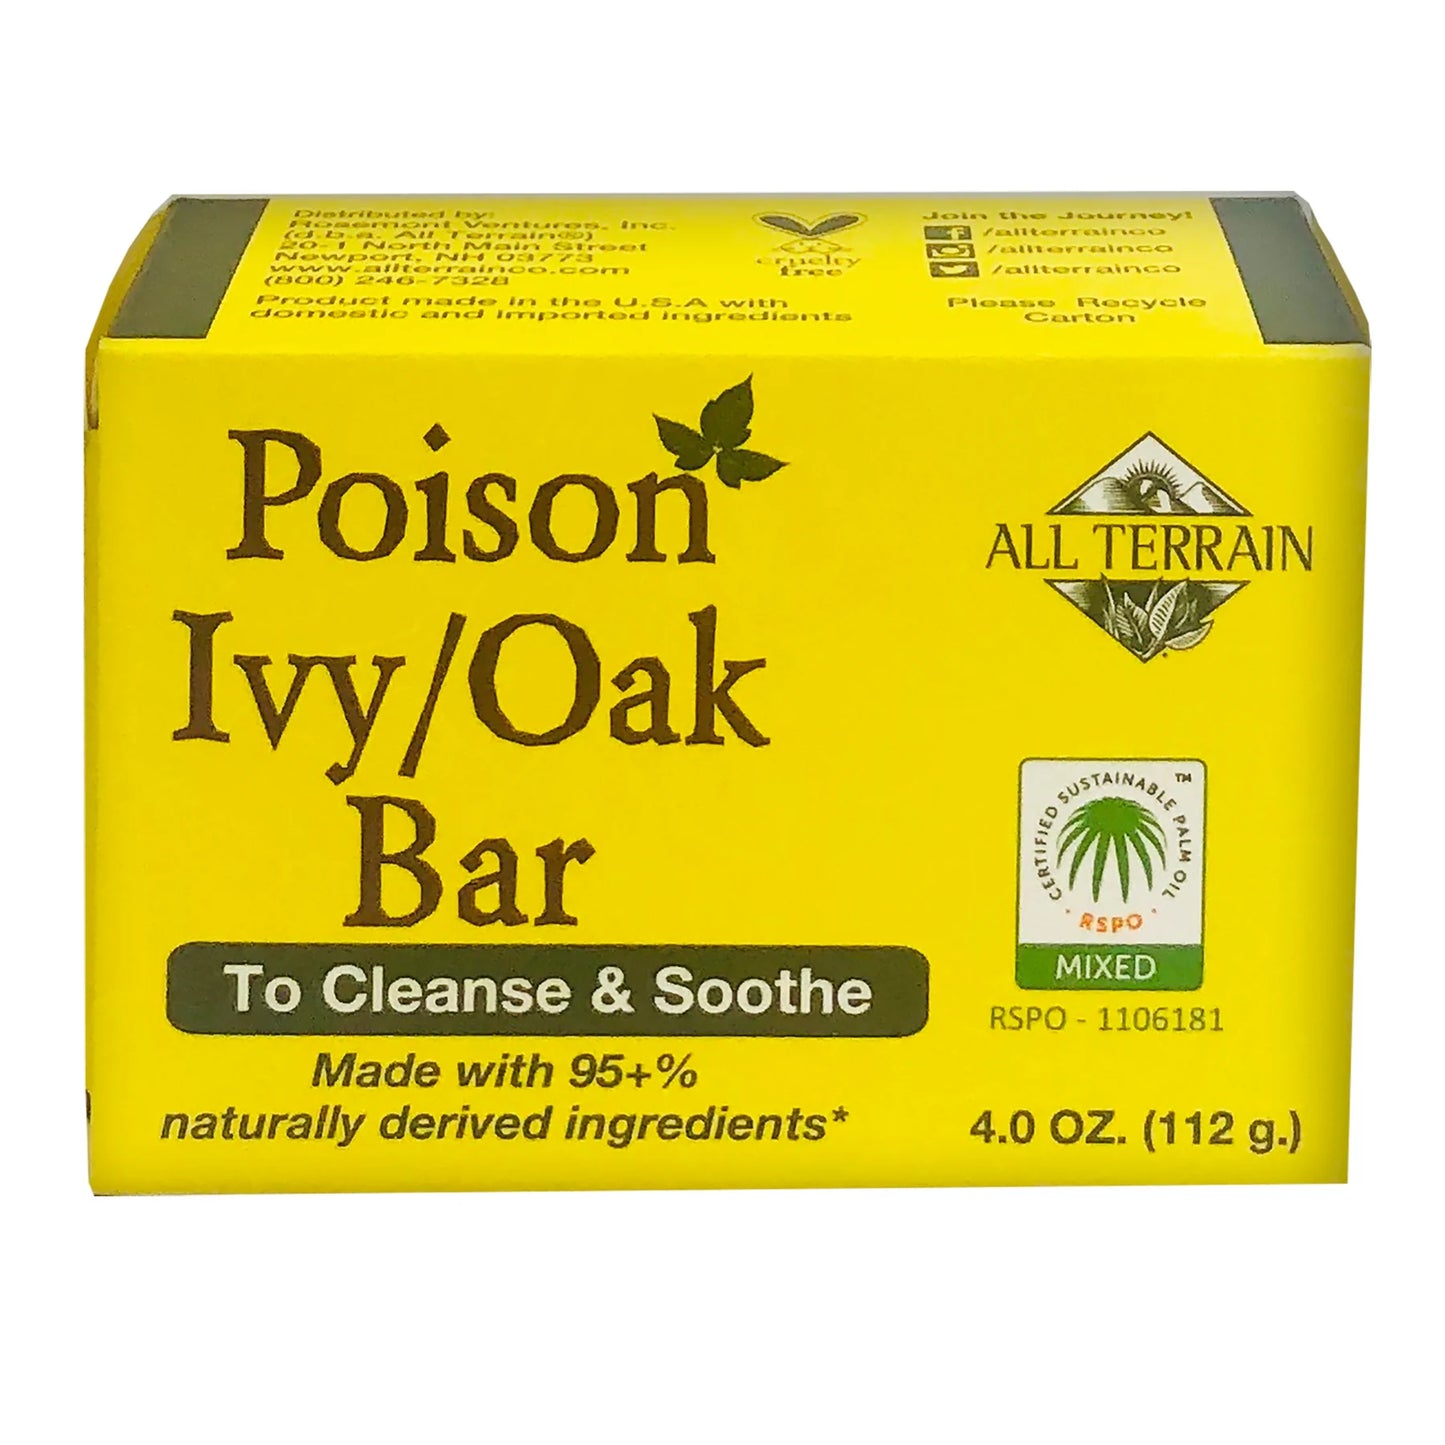 All Terrain Poison Ivy/Oak Bar